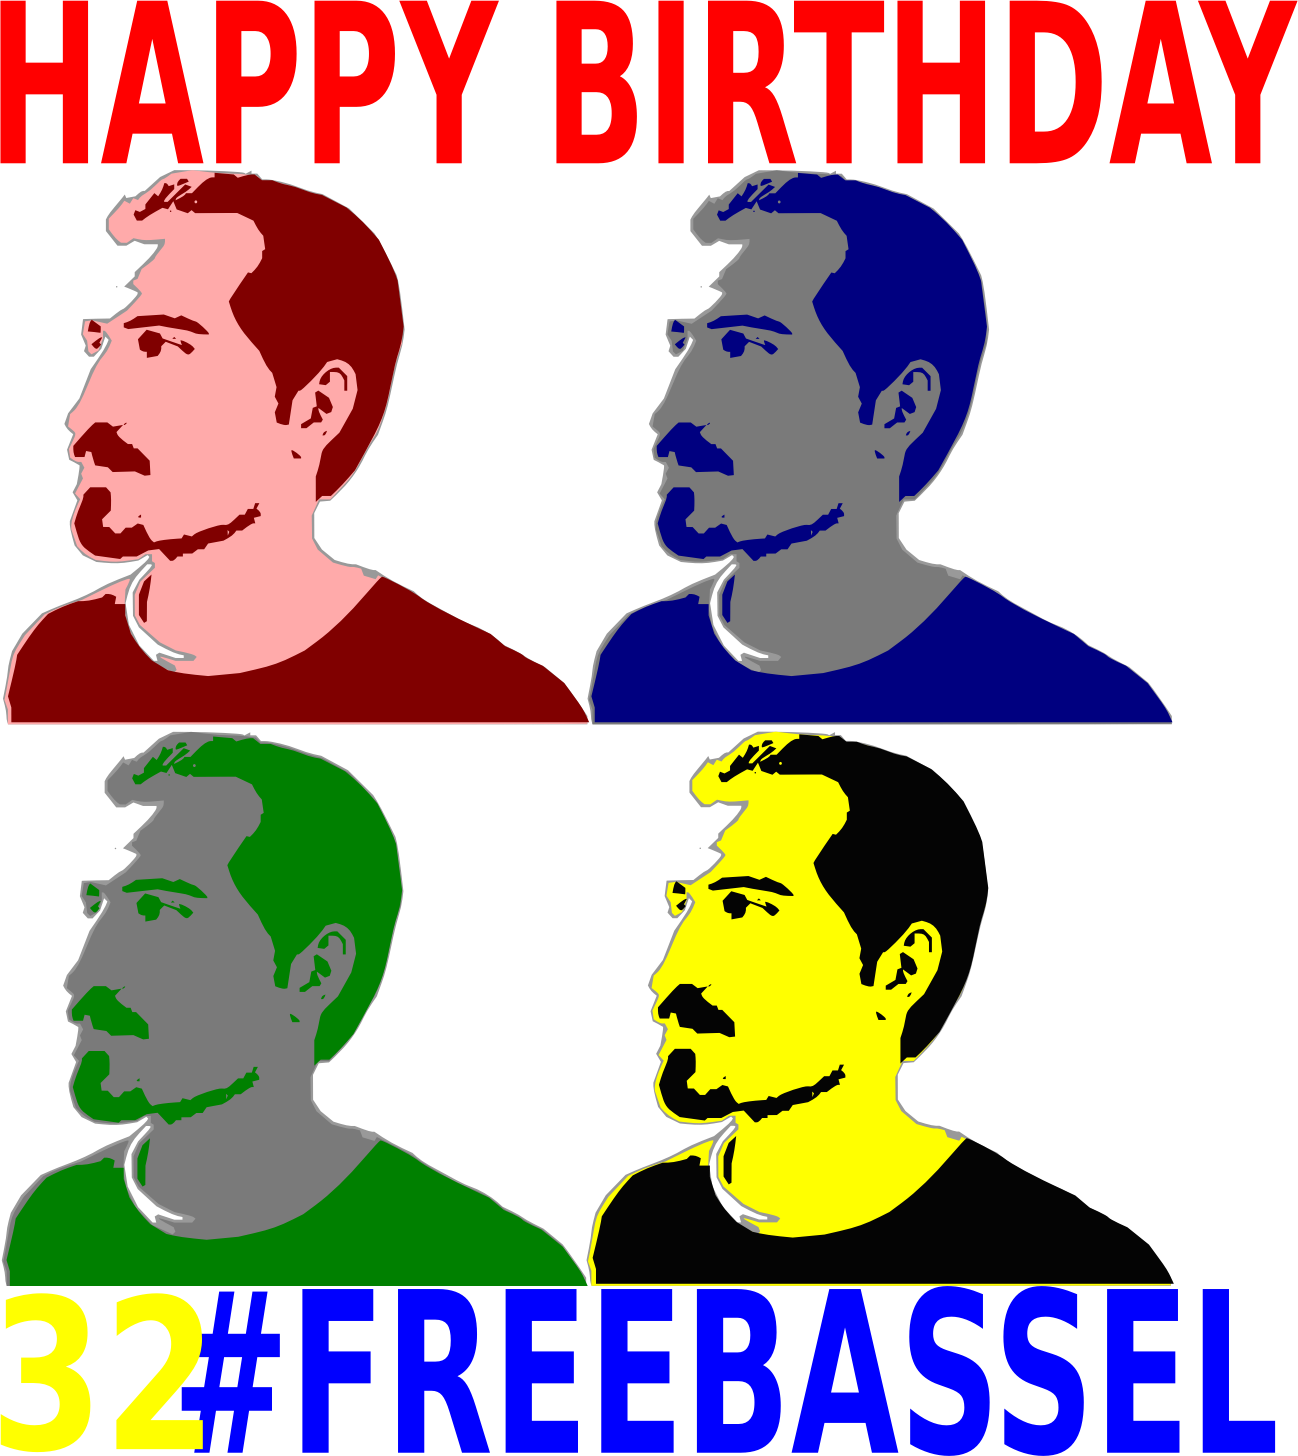 32 Birthday FREEBASSEL  SVG Clip arts